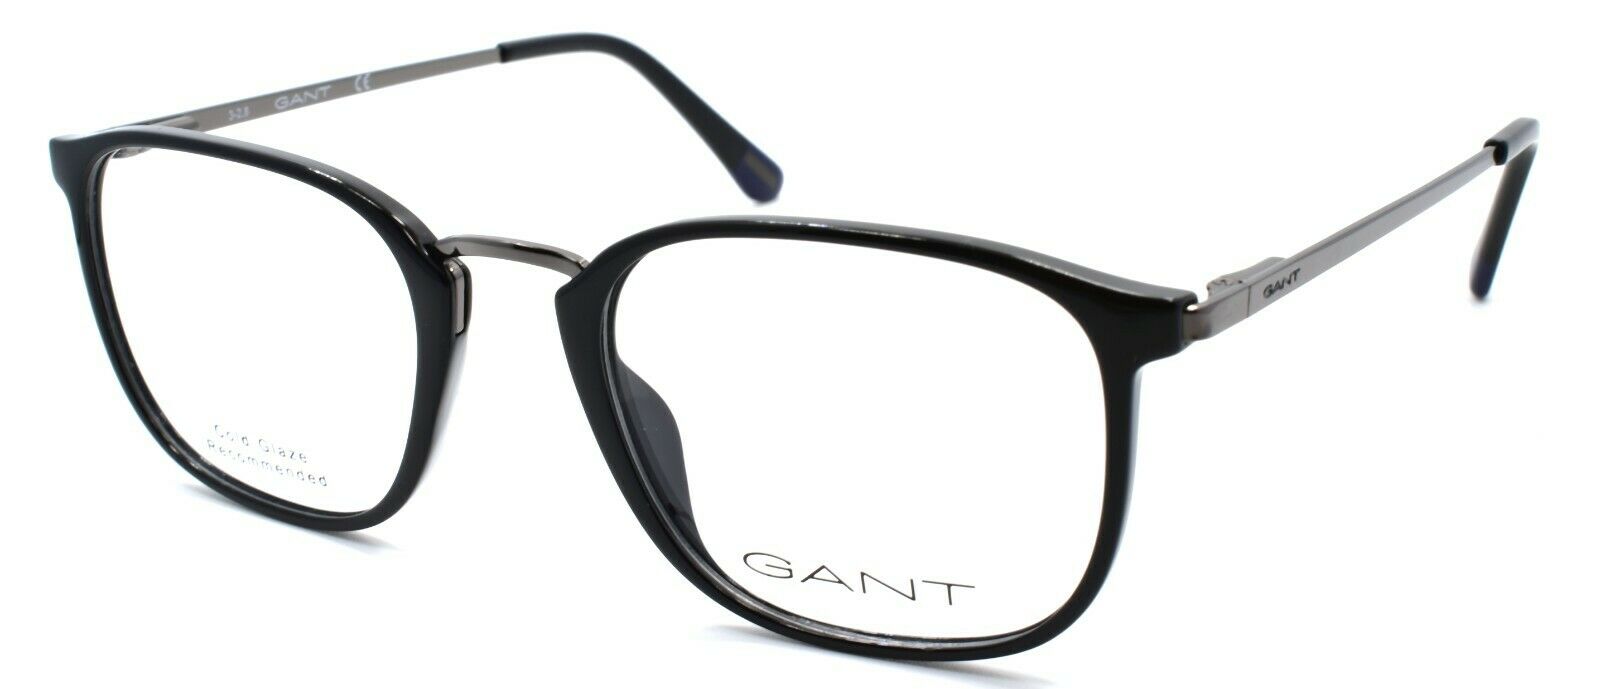 1-GANT GA3190 001 Women's Eyeglasses Frames 49-20-145 Black / Gunmetal-889214047236-IKSpecs